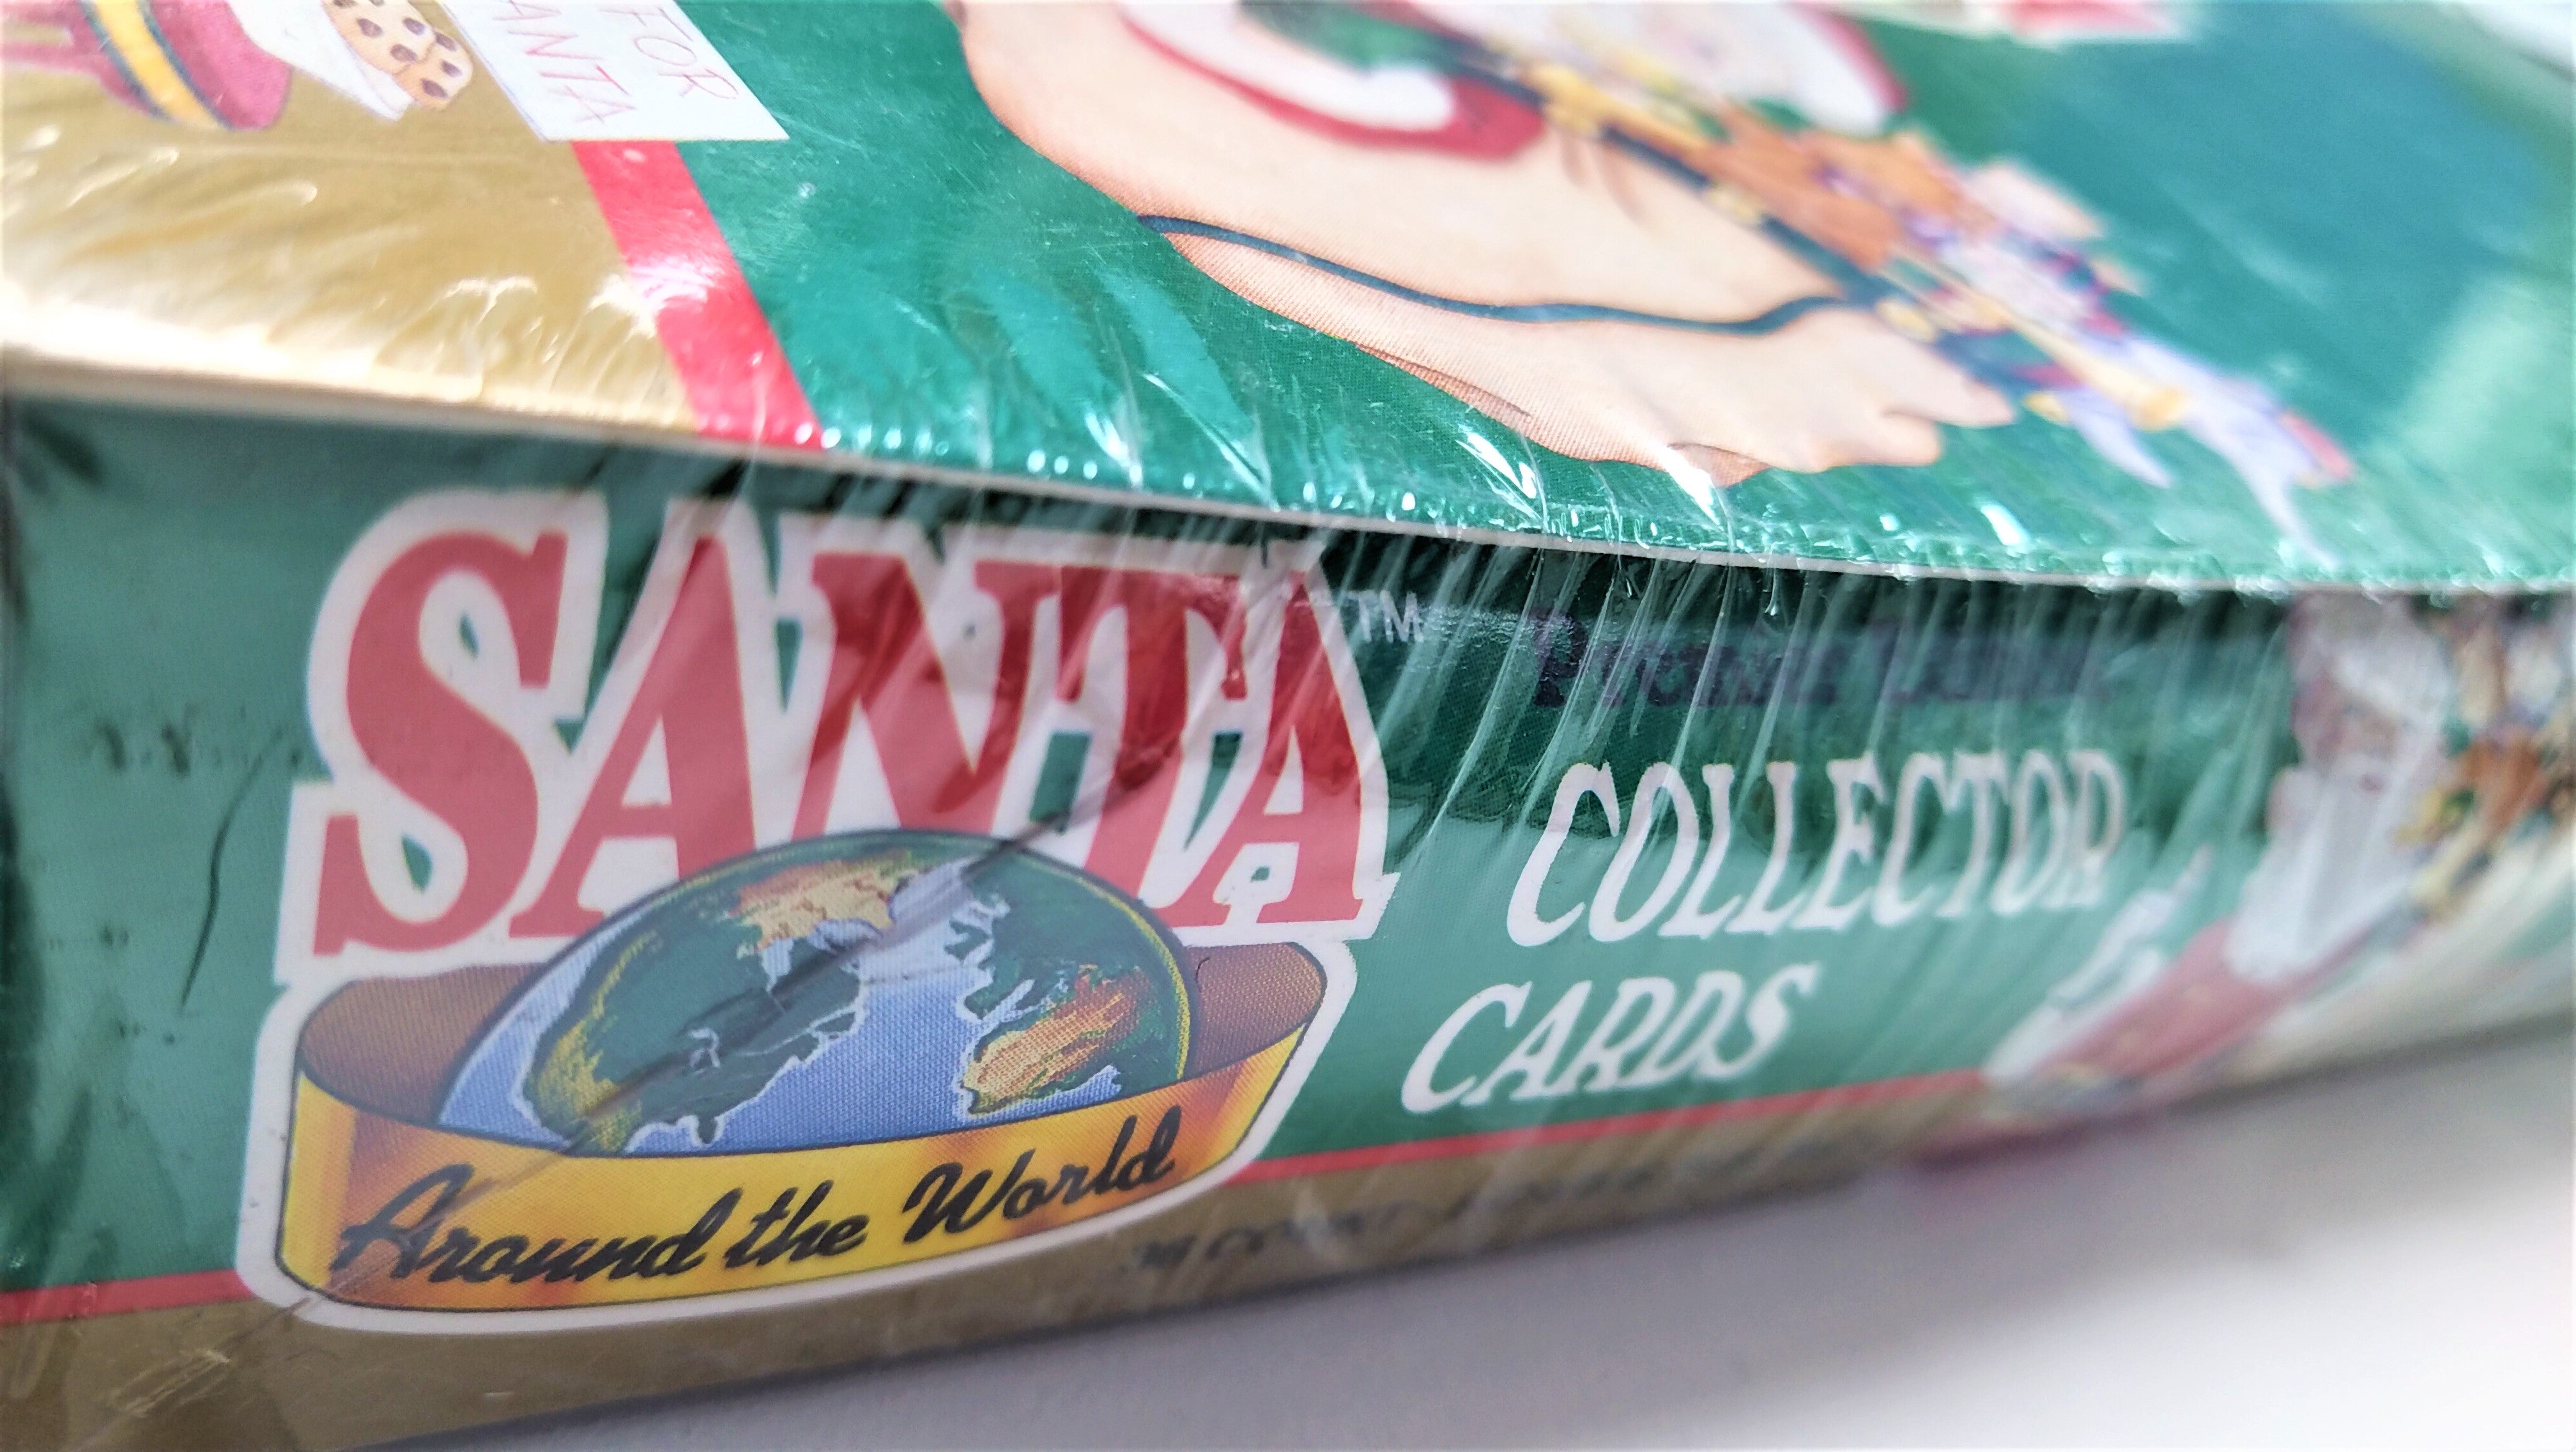 1994 Santa Around The World Collector Cards Premiere Edition Box - Miraj Trading